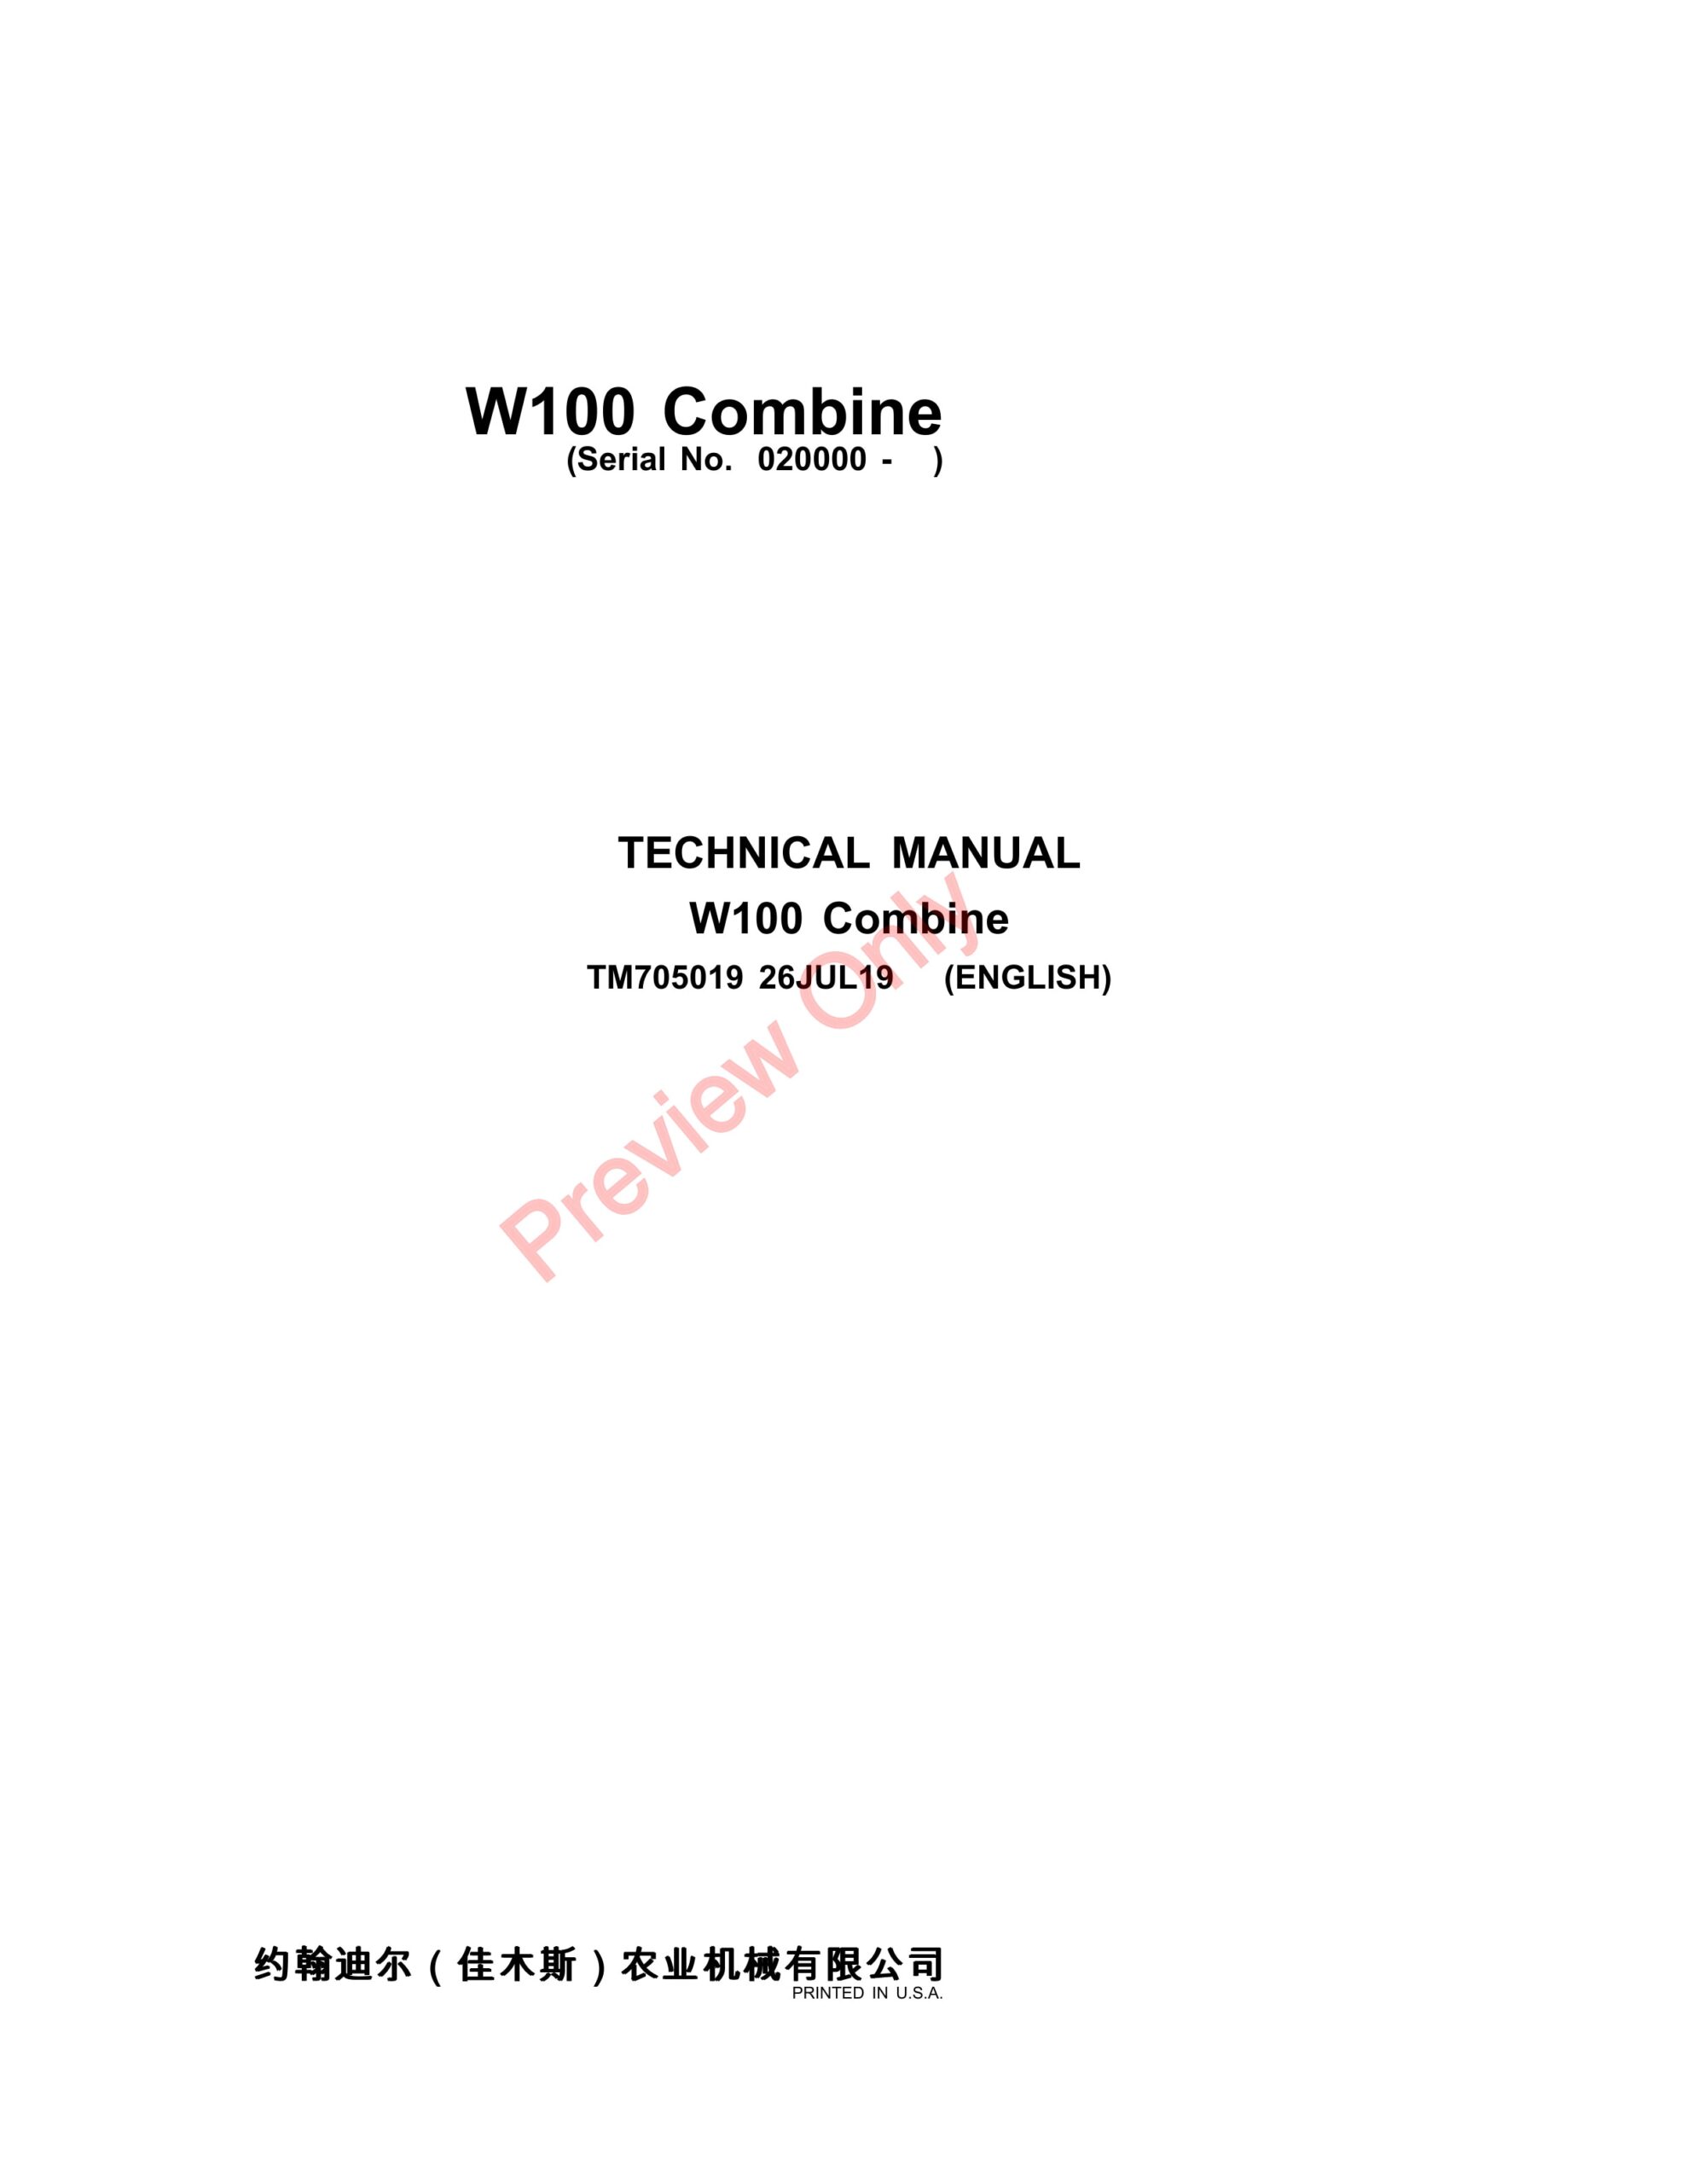 John Deere W100 Combine Technical Manual TM705019 26JUL19-1